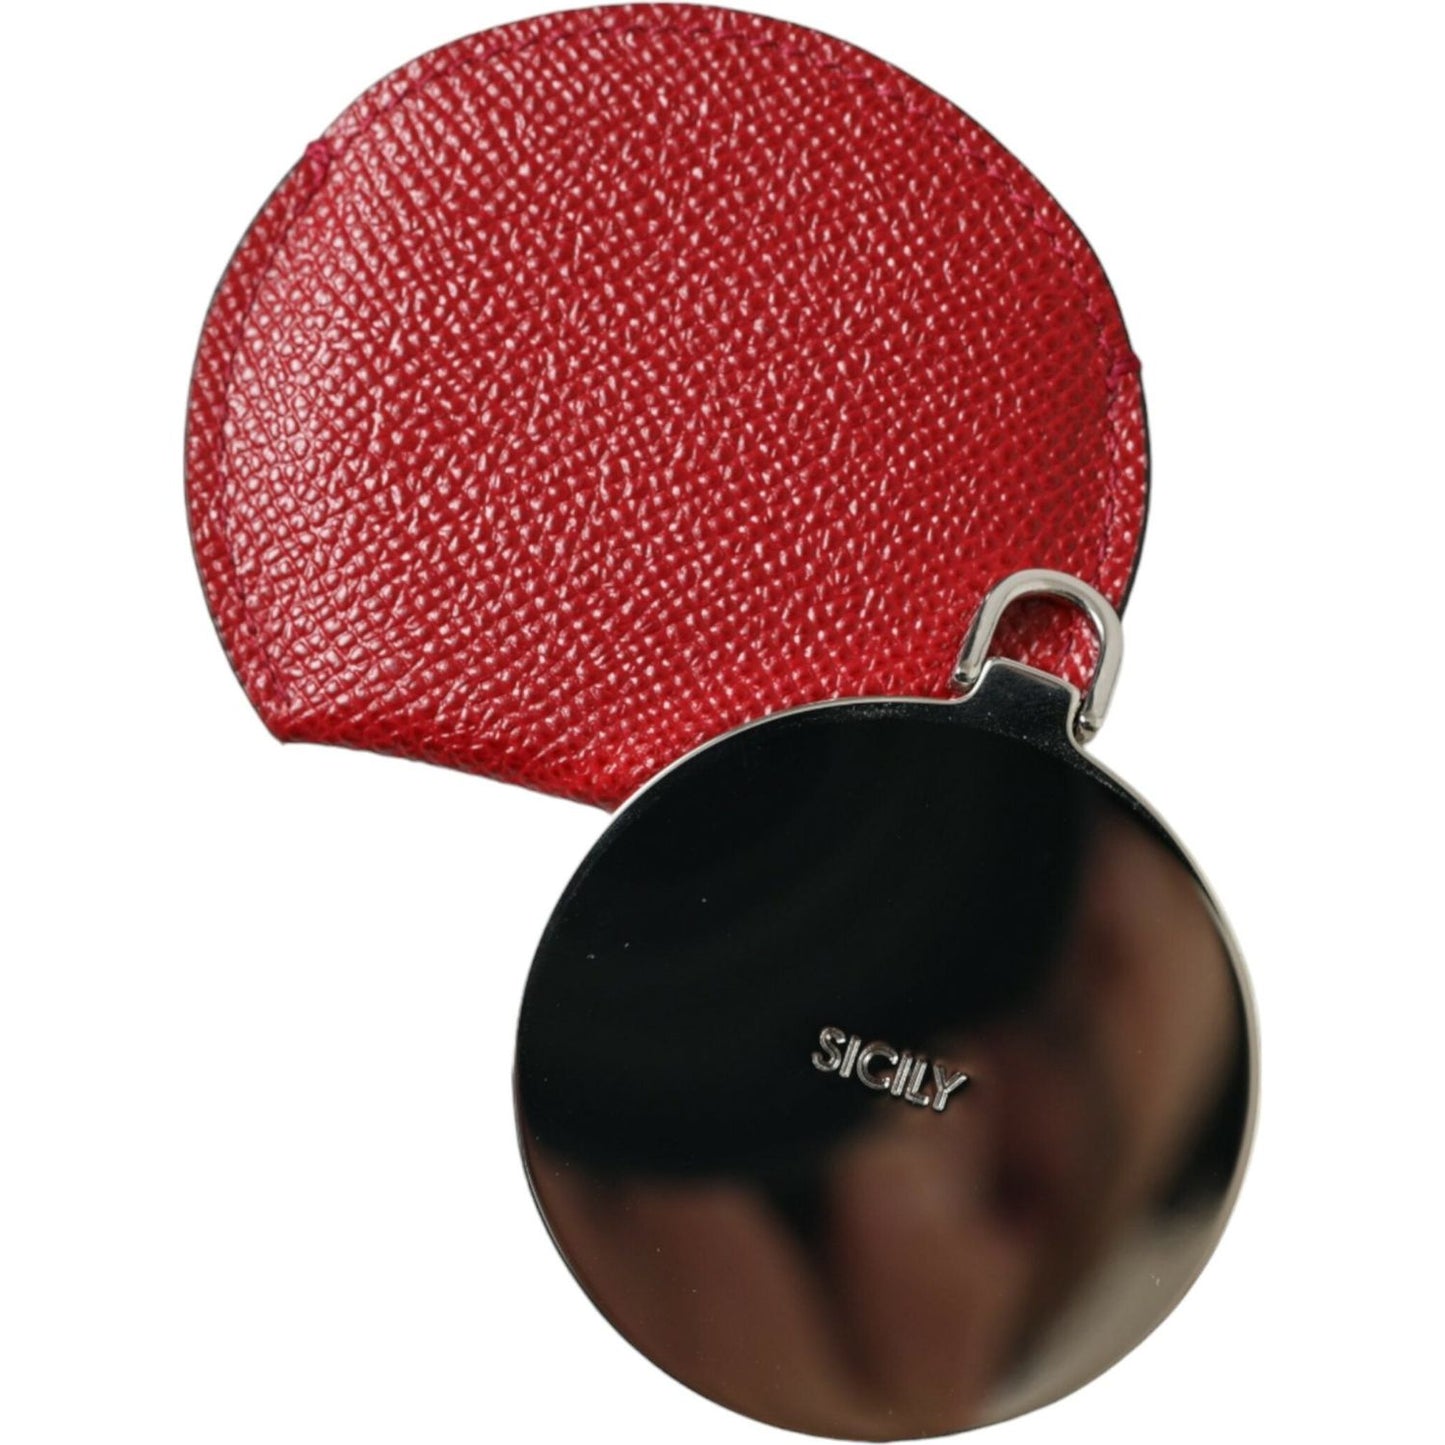 Dolce & Gabbana Elegant Red Leather Mirror Holder elegant-red-leather-mirror-holder